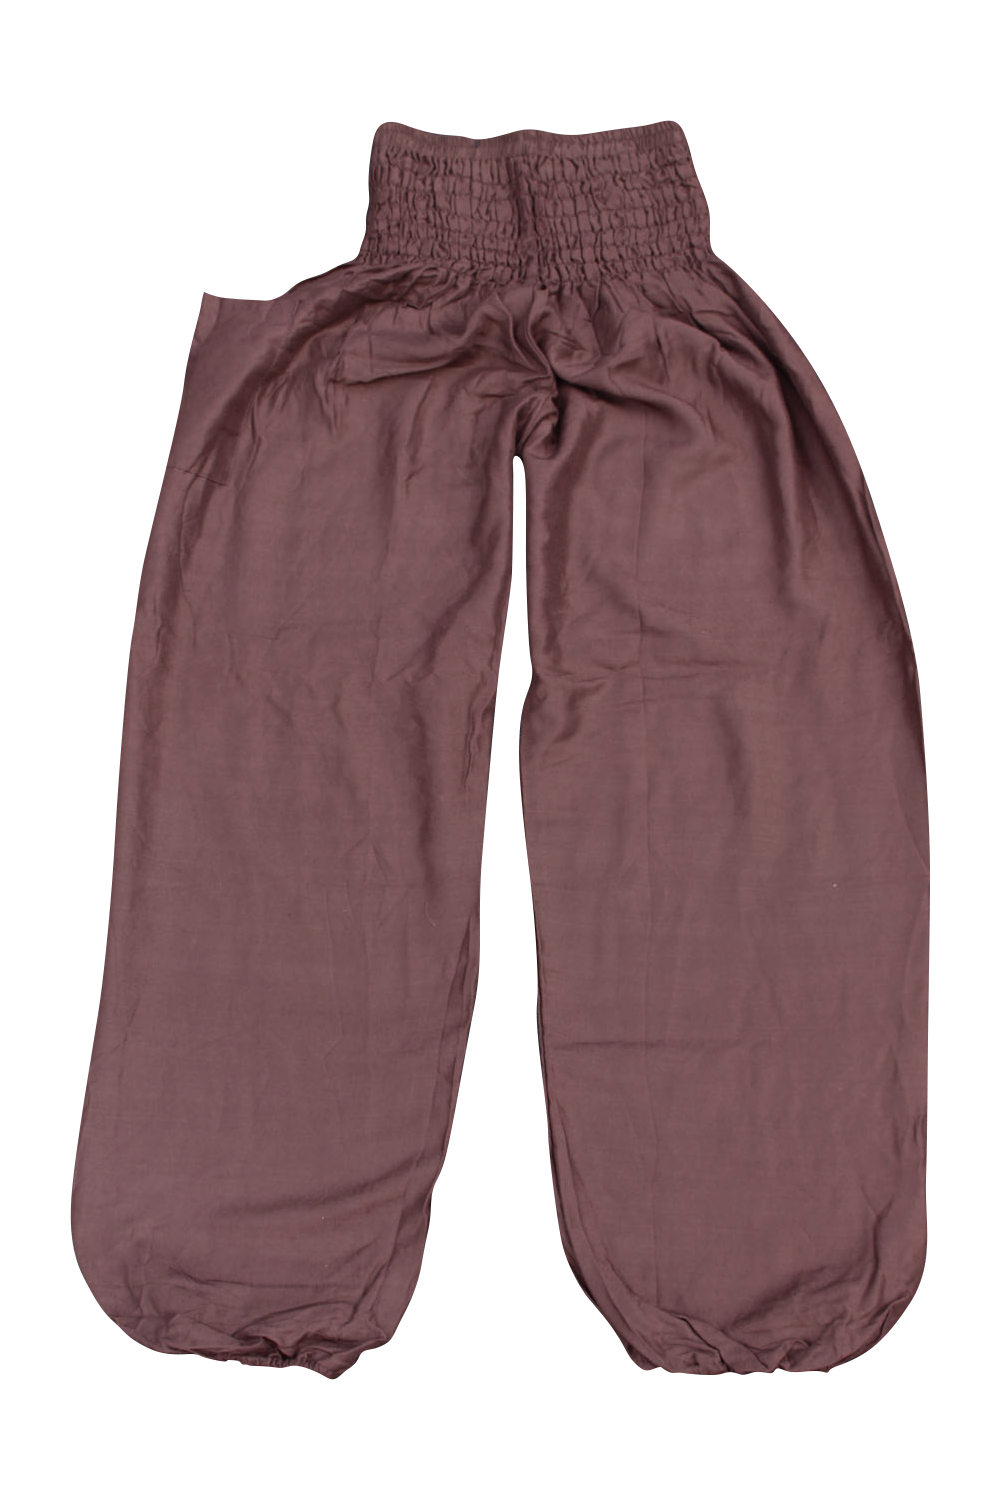 brown solid color harem yoga pants bohemian island